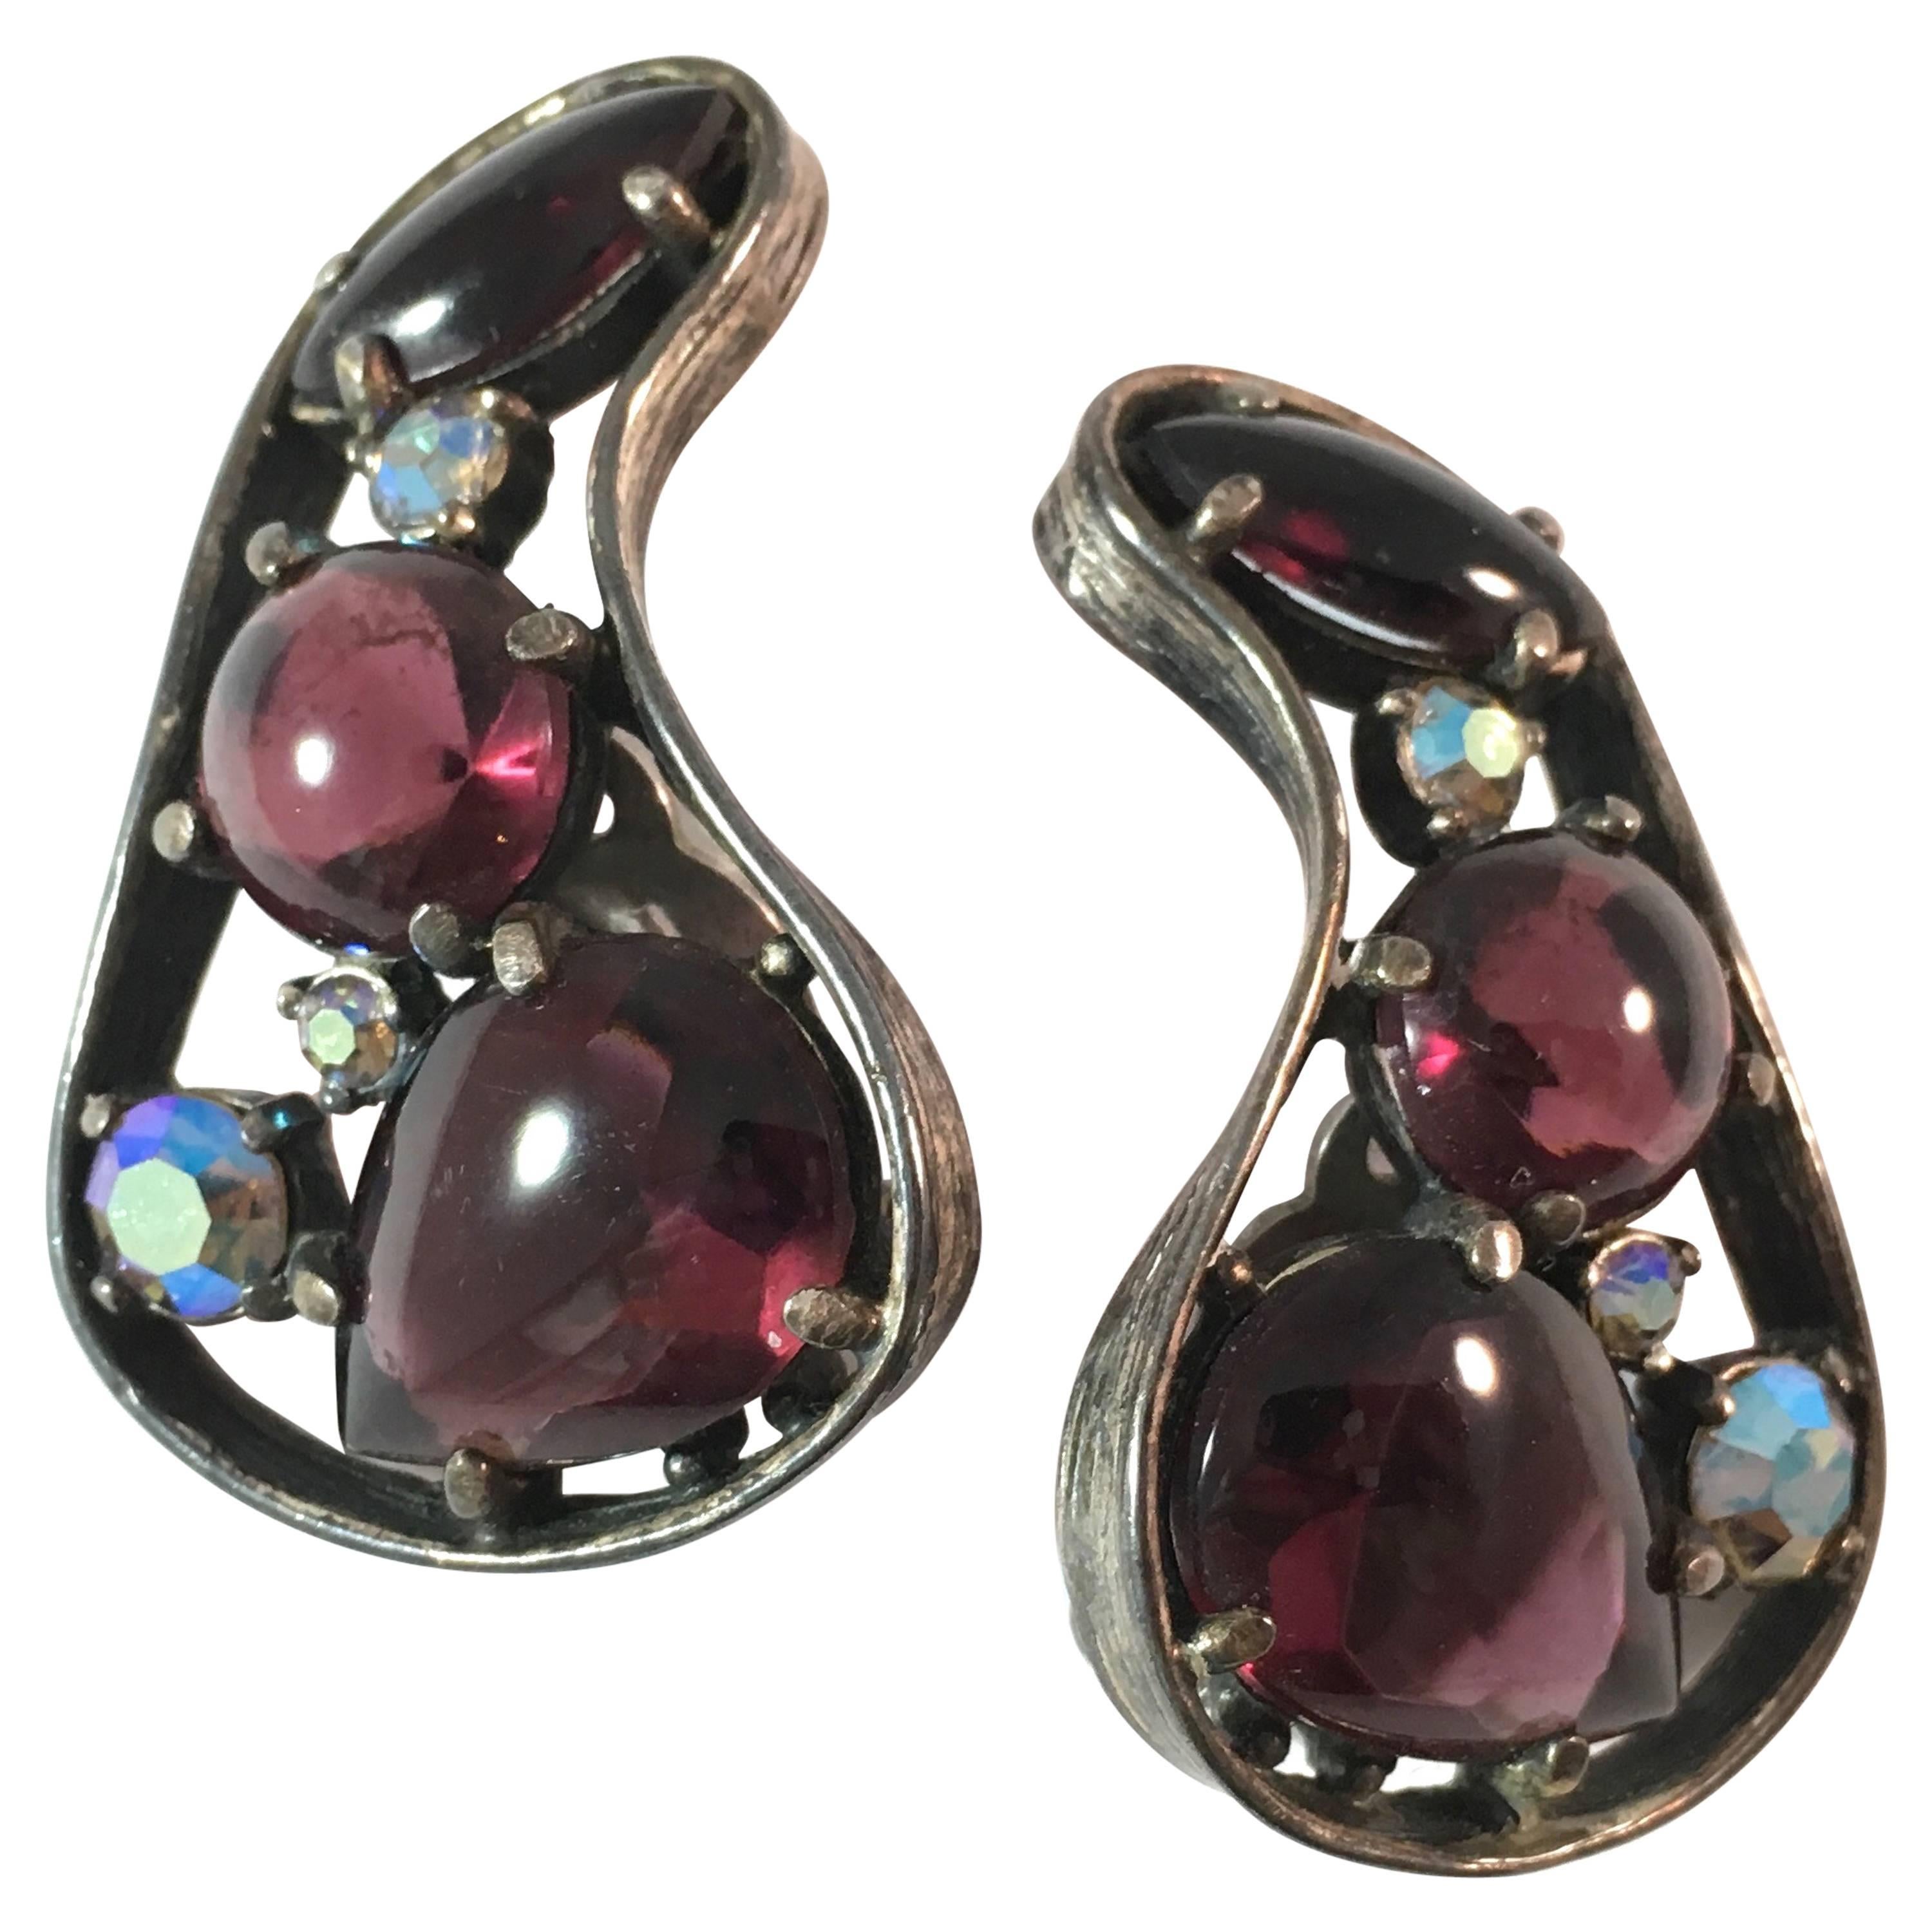 1940s Schiaparelli Biomorphic Shaped Earrings For Sale